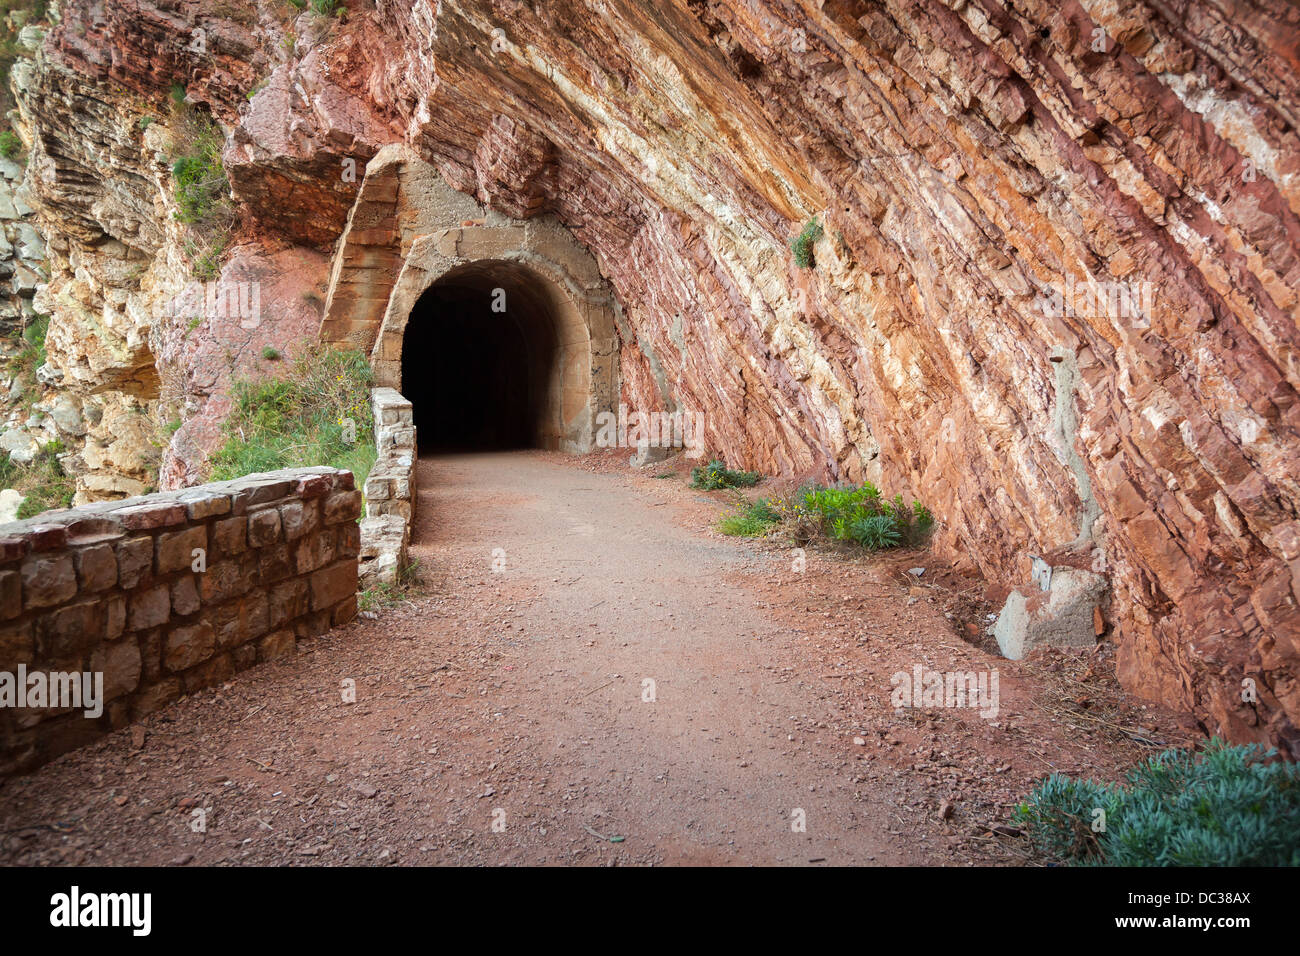 Dunklen alten Tunneleingang in roten Felsen Stockfoto